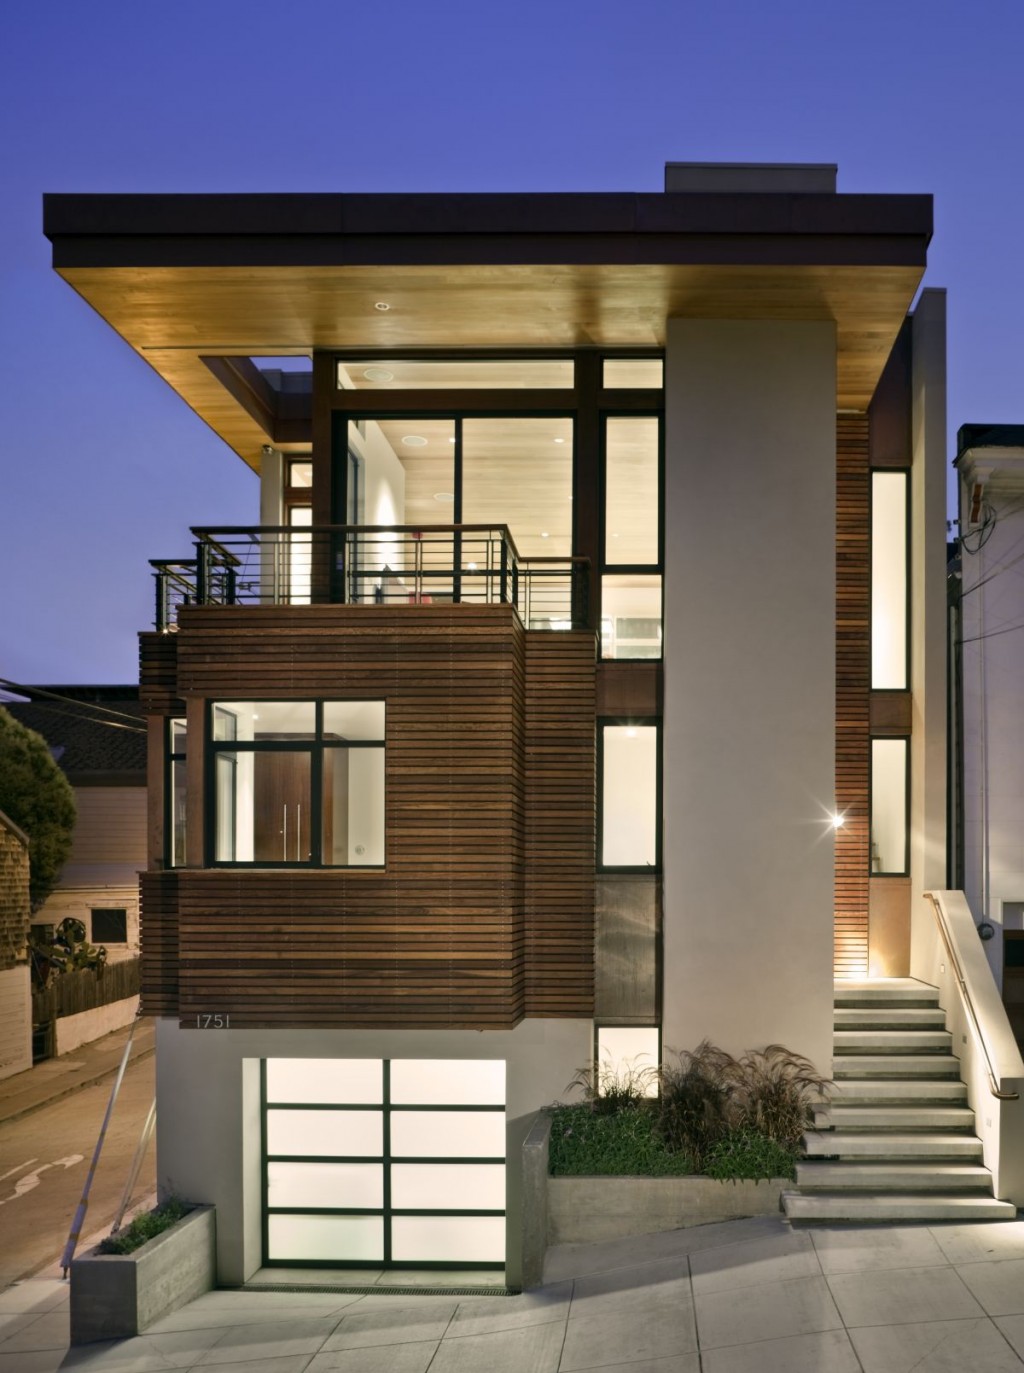 Desain Rumah Minimalis Gaya Modern Berkelas 2015 Sungguh Menyenangkan Memang